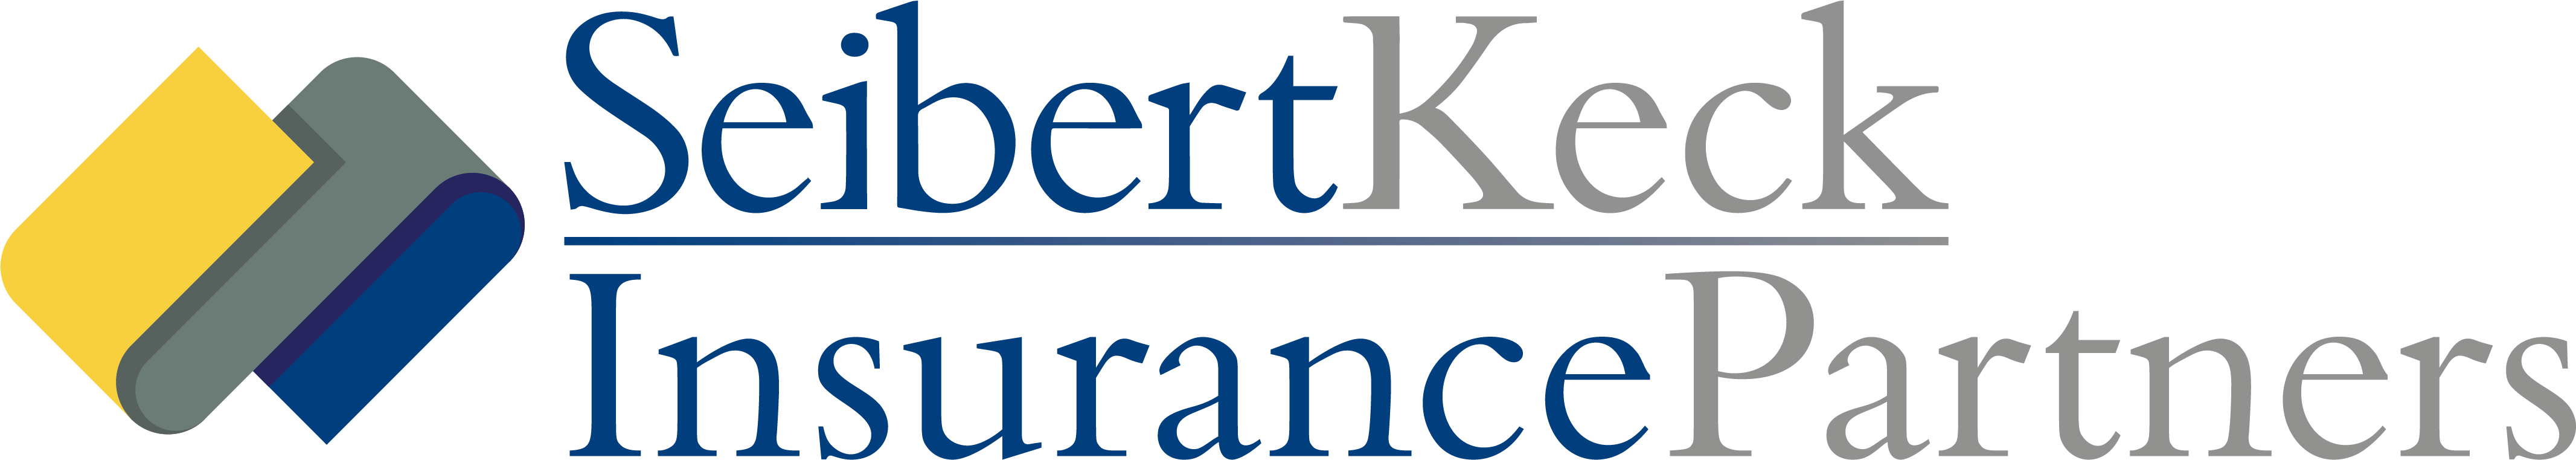 SeibertKeck Insurance Partners